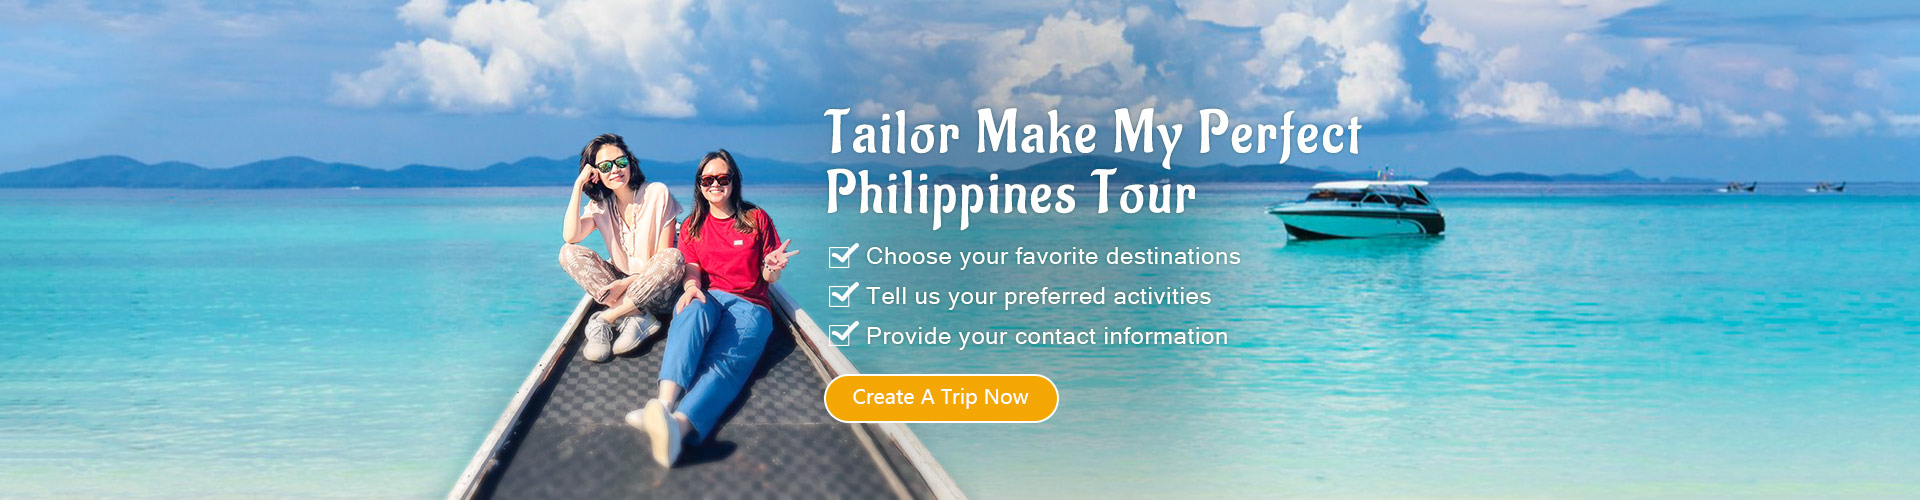 Tailor Make Philippines Tour